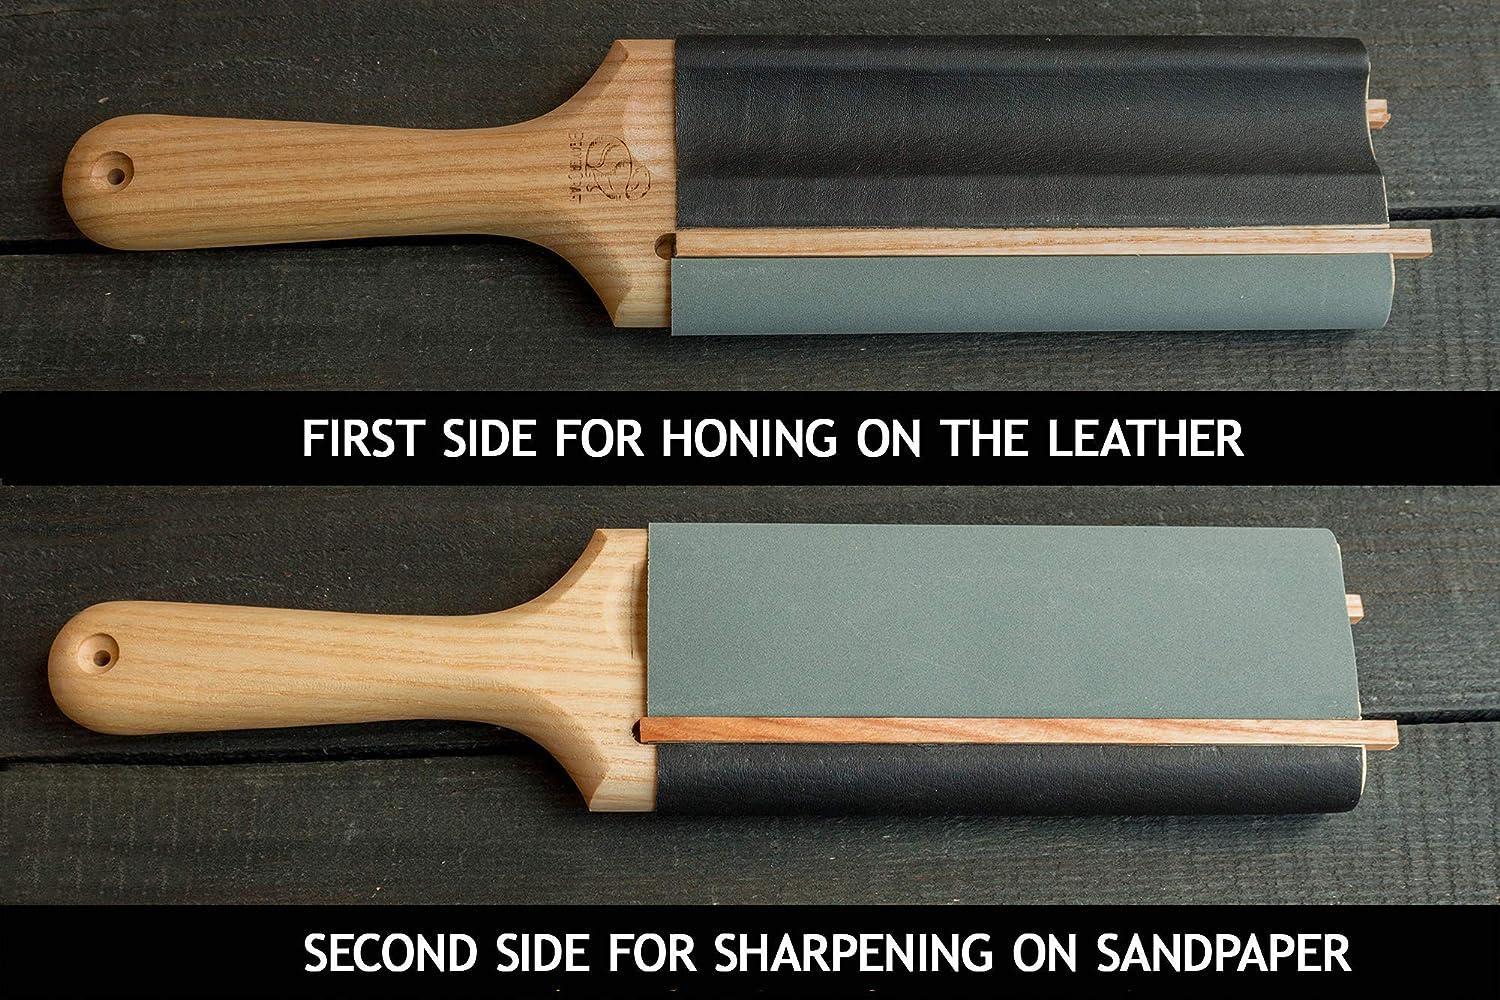 BeaverCraft LS4P1 Leather Strop Stropping Block Kit Knife Sharpening Kit Leather Honing Strop for Sharpening Knives 8'' Long BeaverCraft Wood Carving